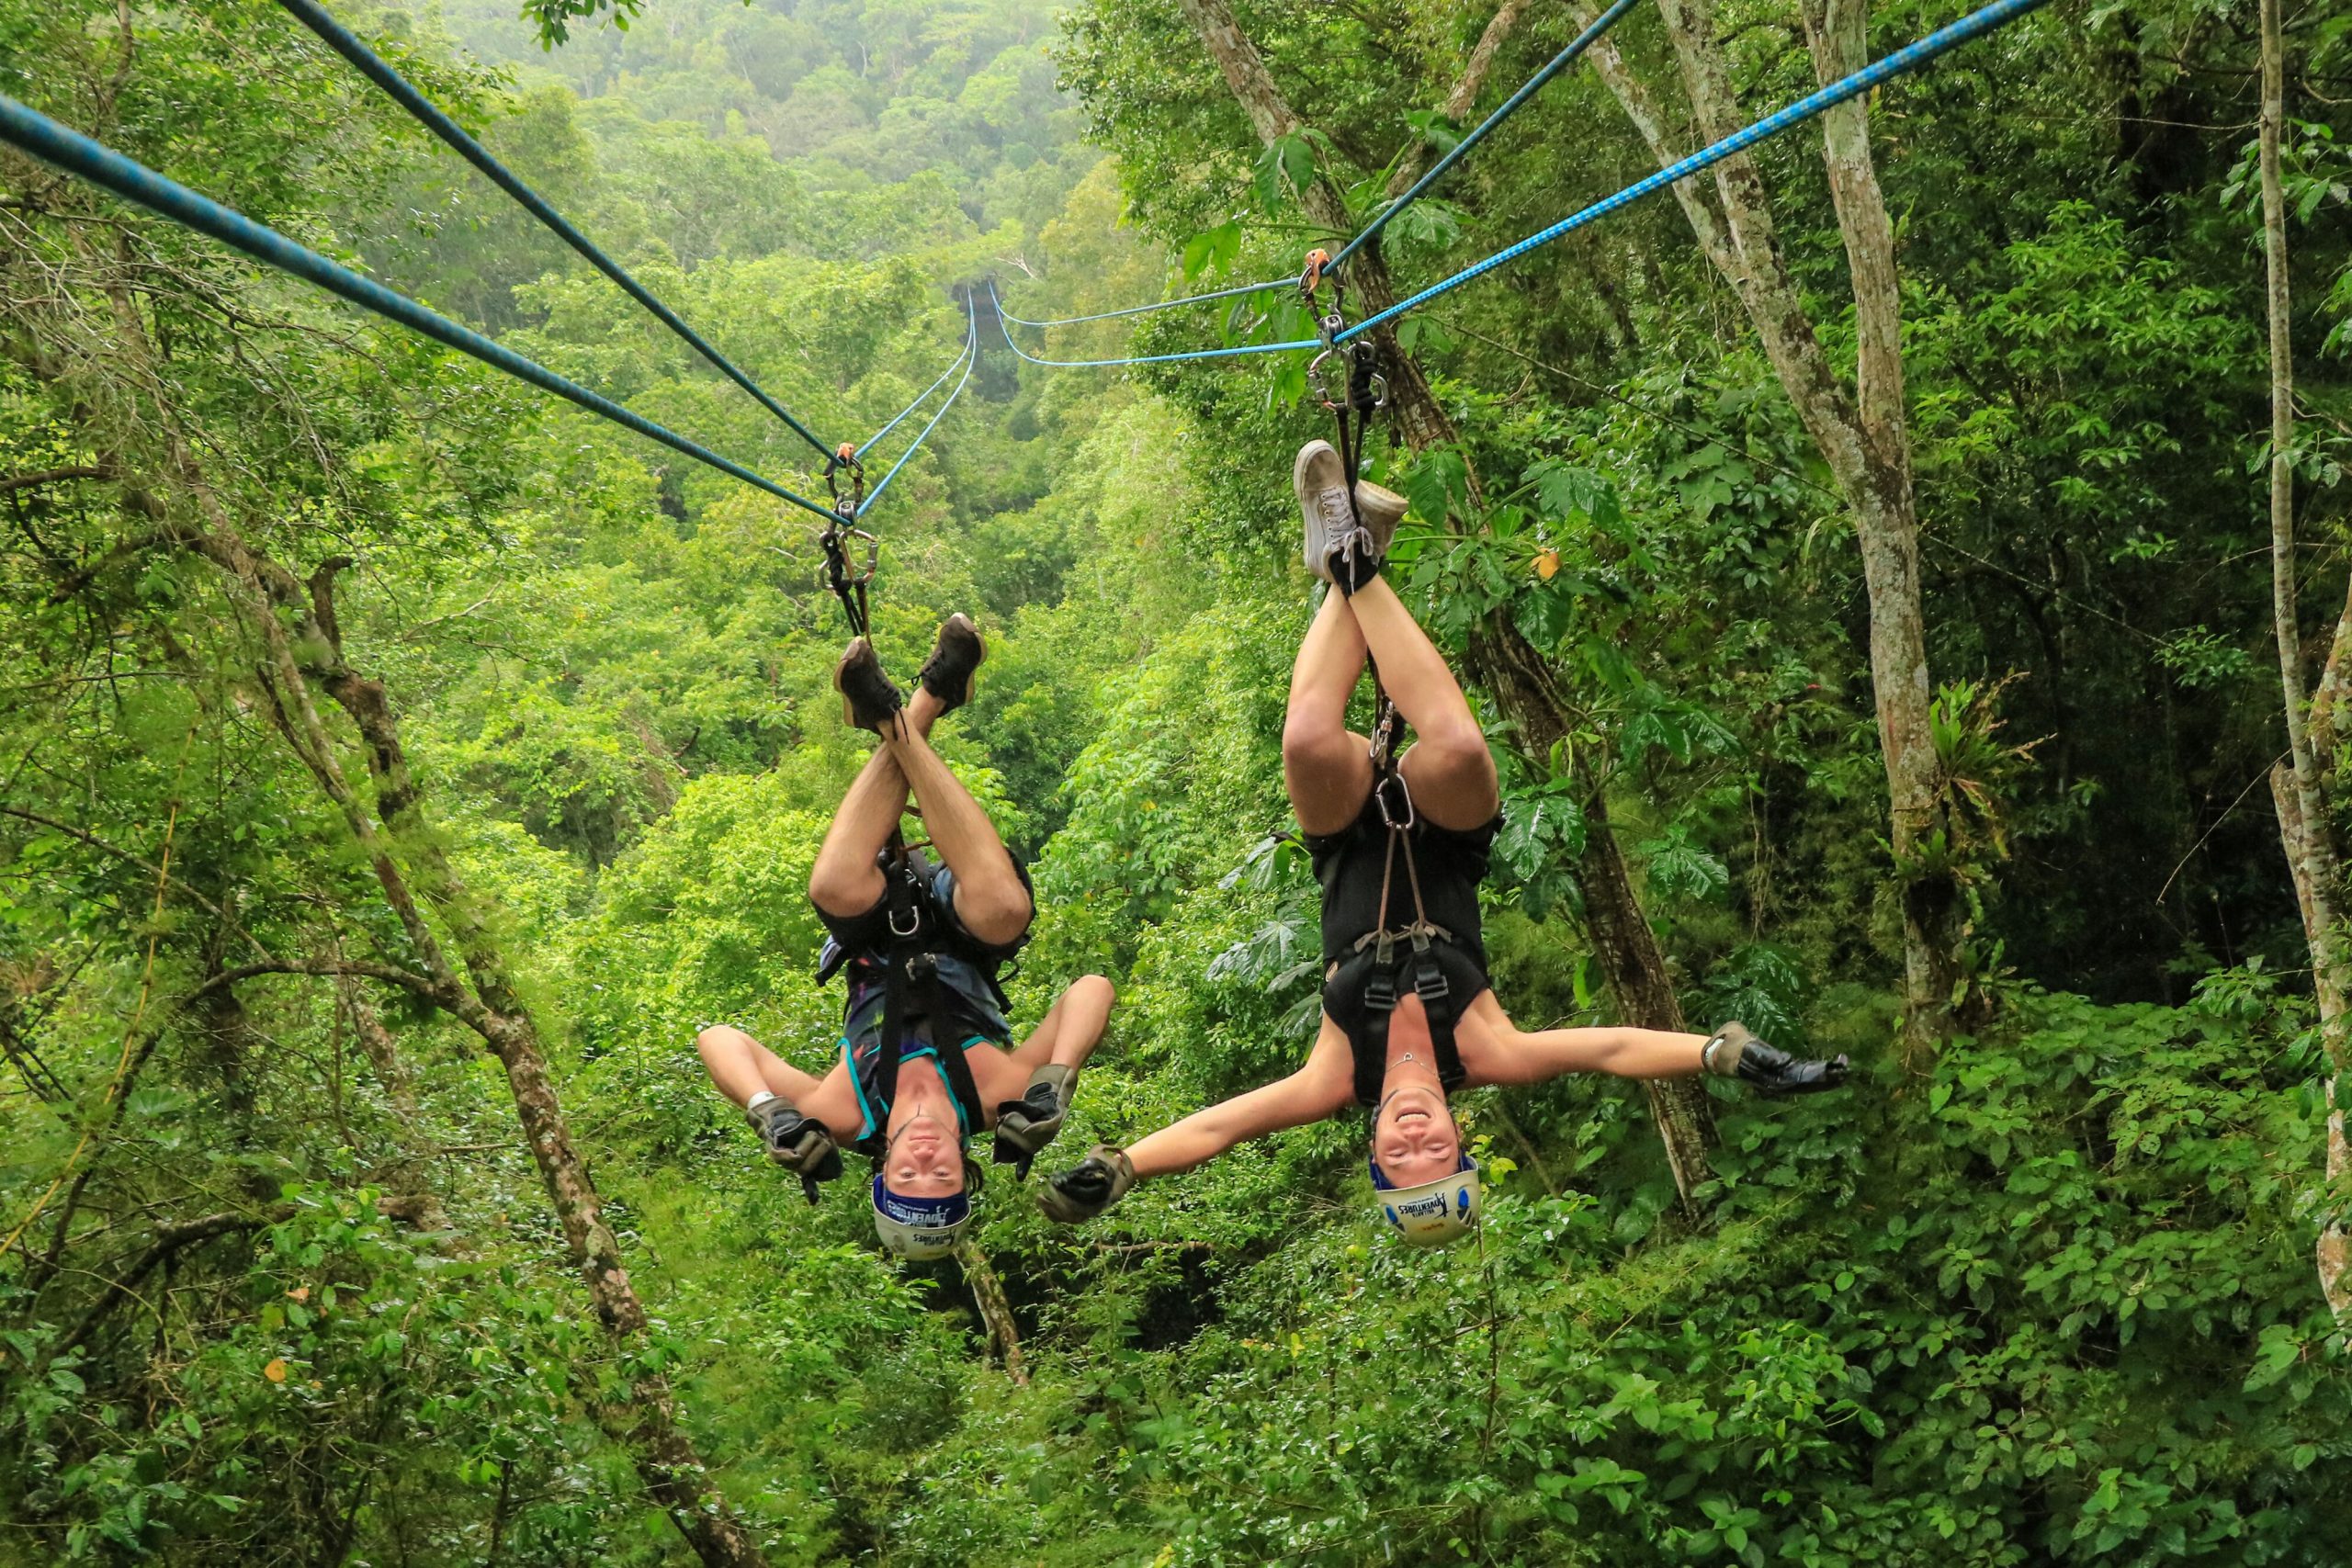 Zipline Adventure Tours - Can't-Miss Tourist Attractions in Jamaica